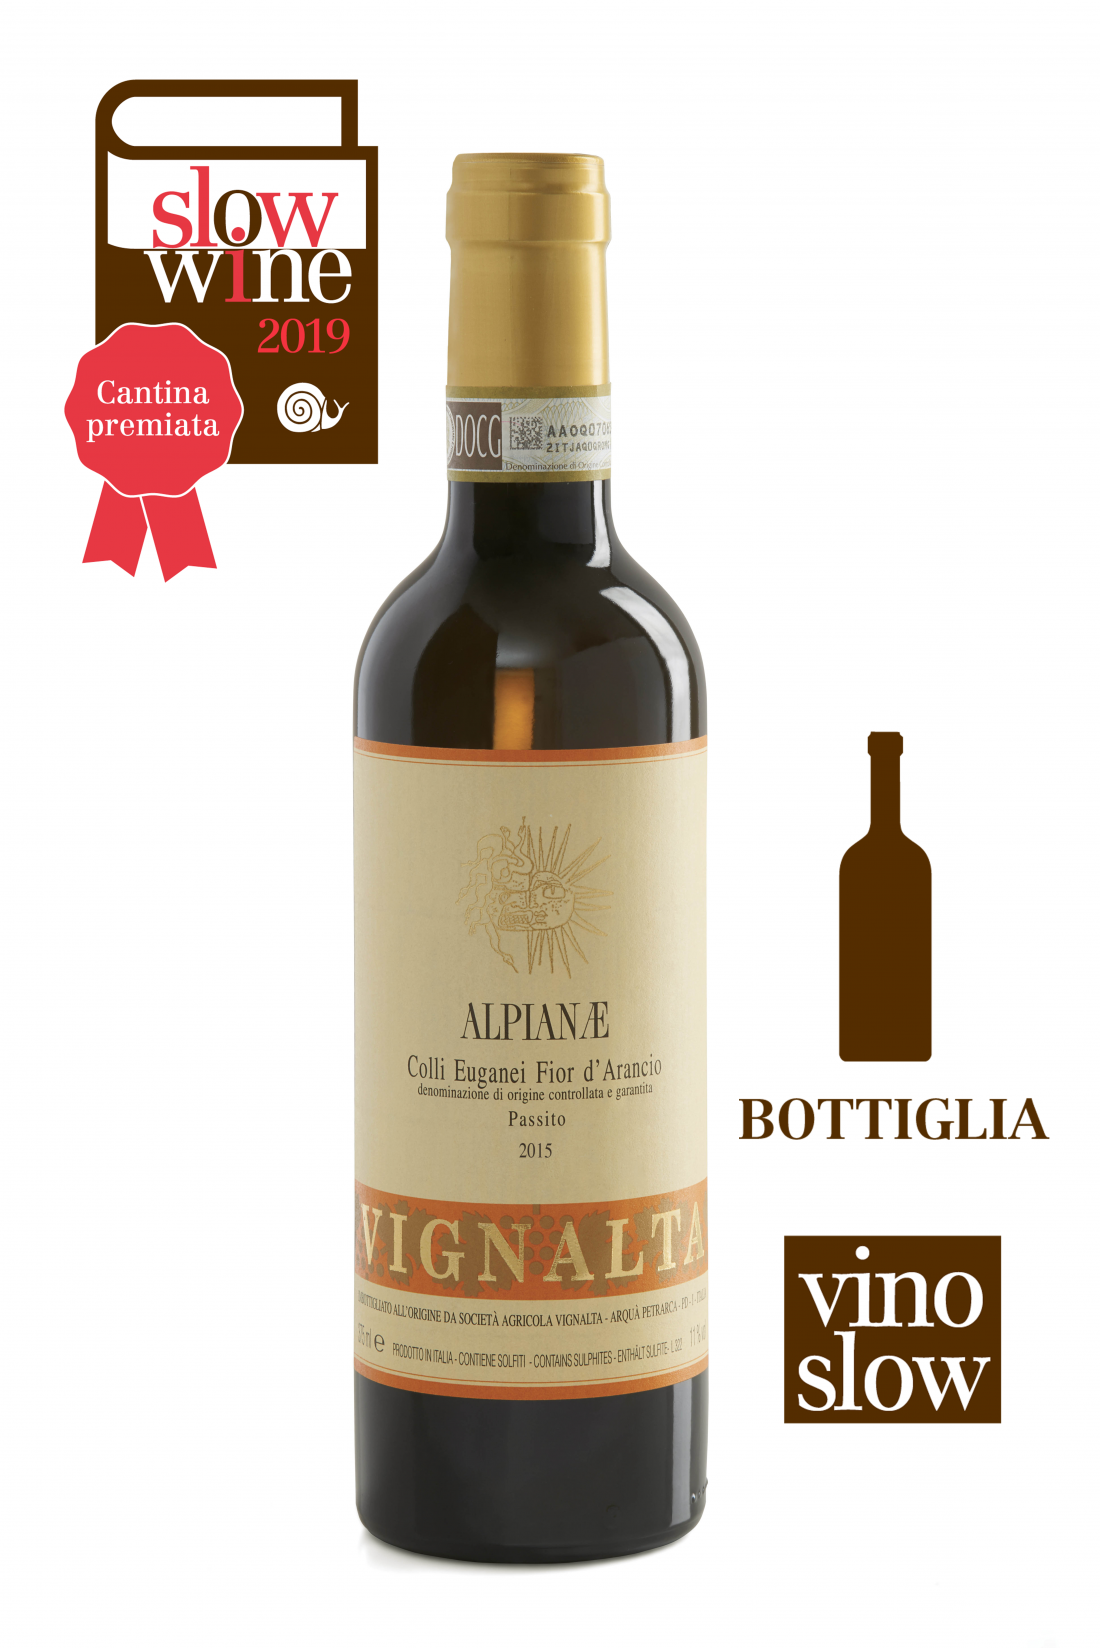 vignalta-alpianae-slow-wine-2019